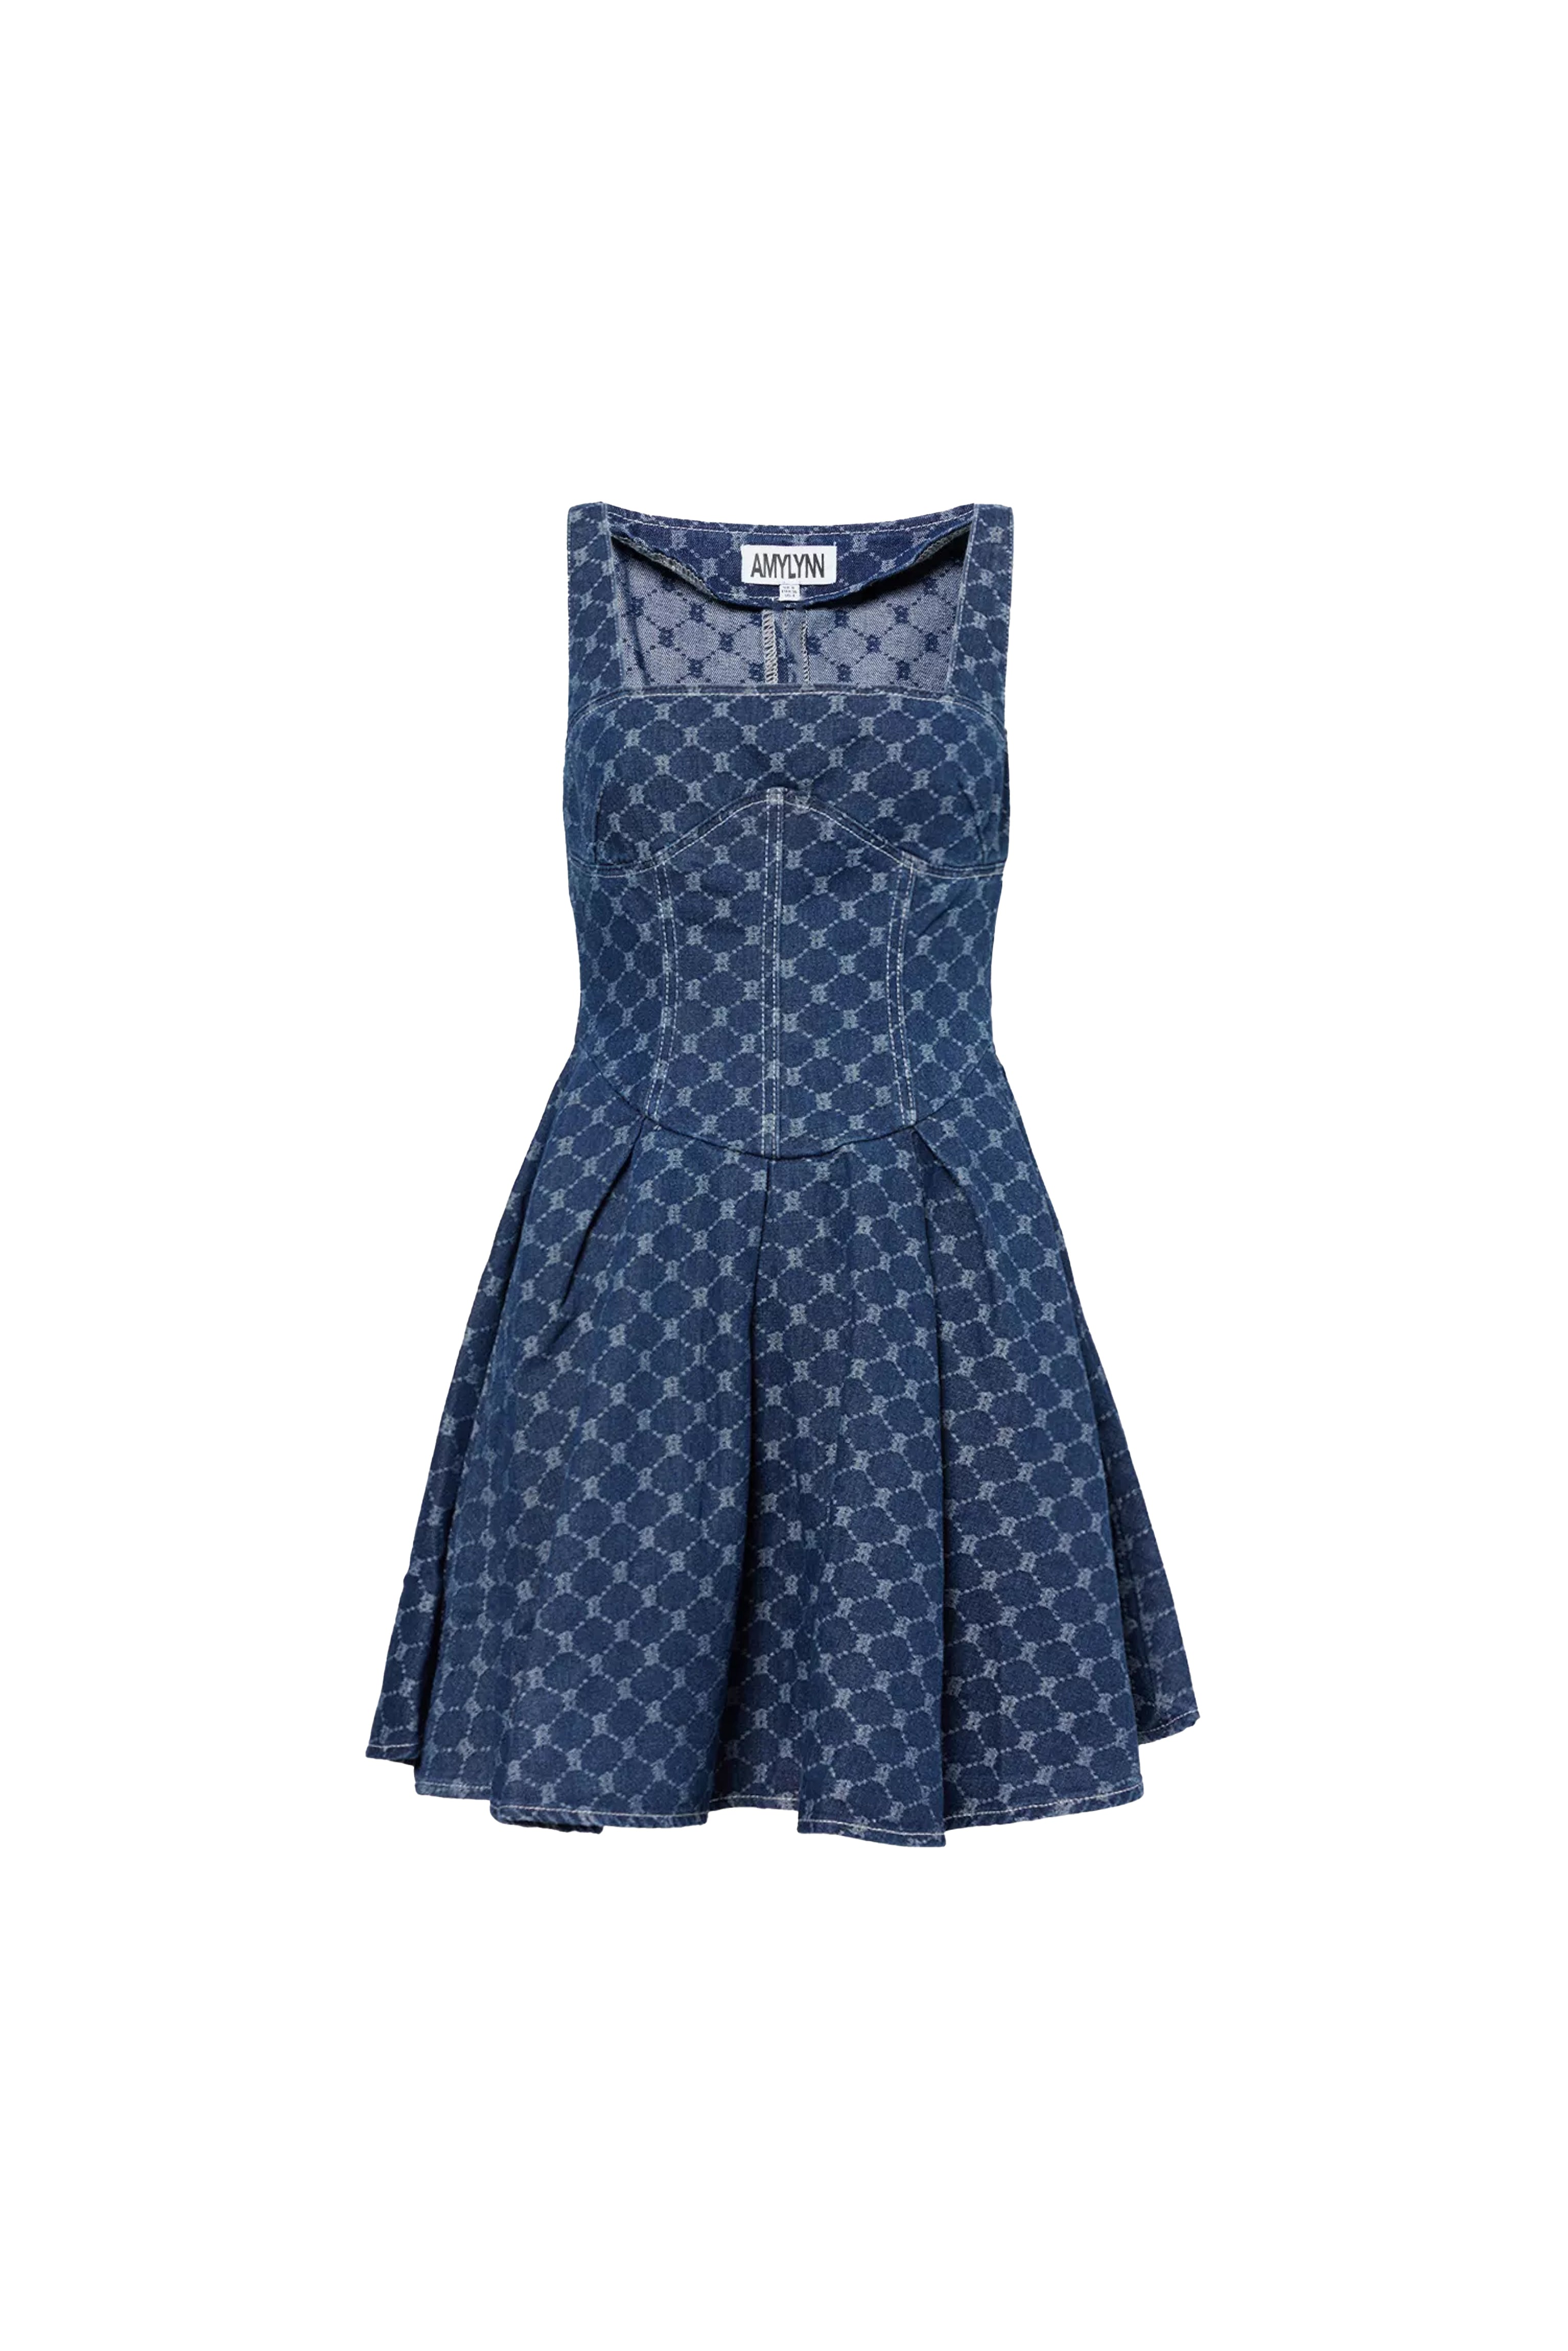 Remi Geo-Print Denim Mini Dress with Pleated Skater Skirt | AMYLYNN